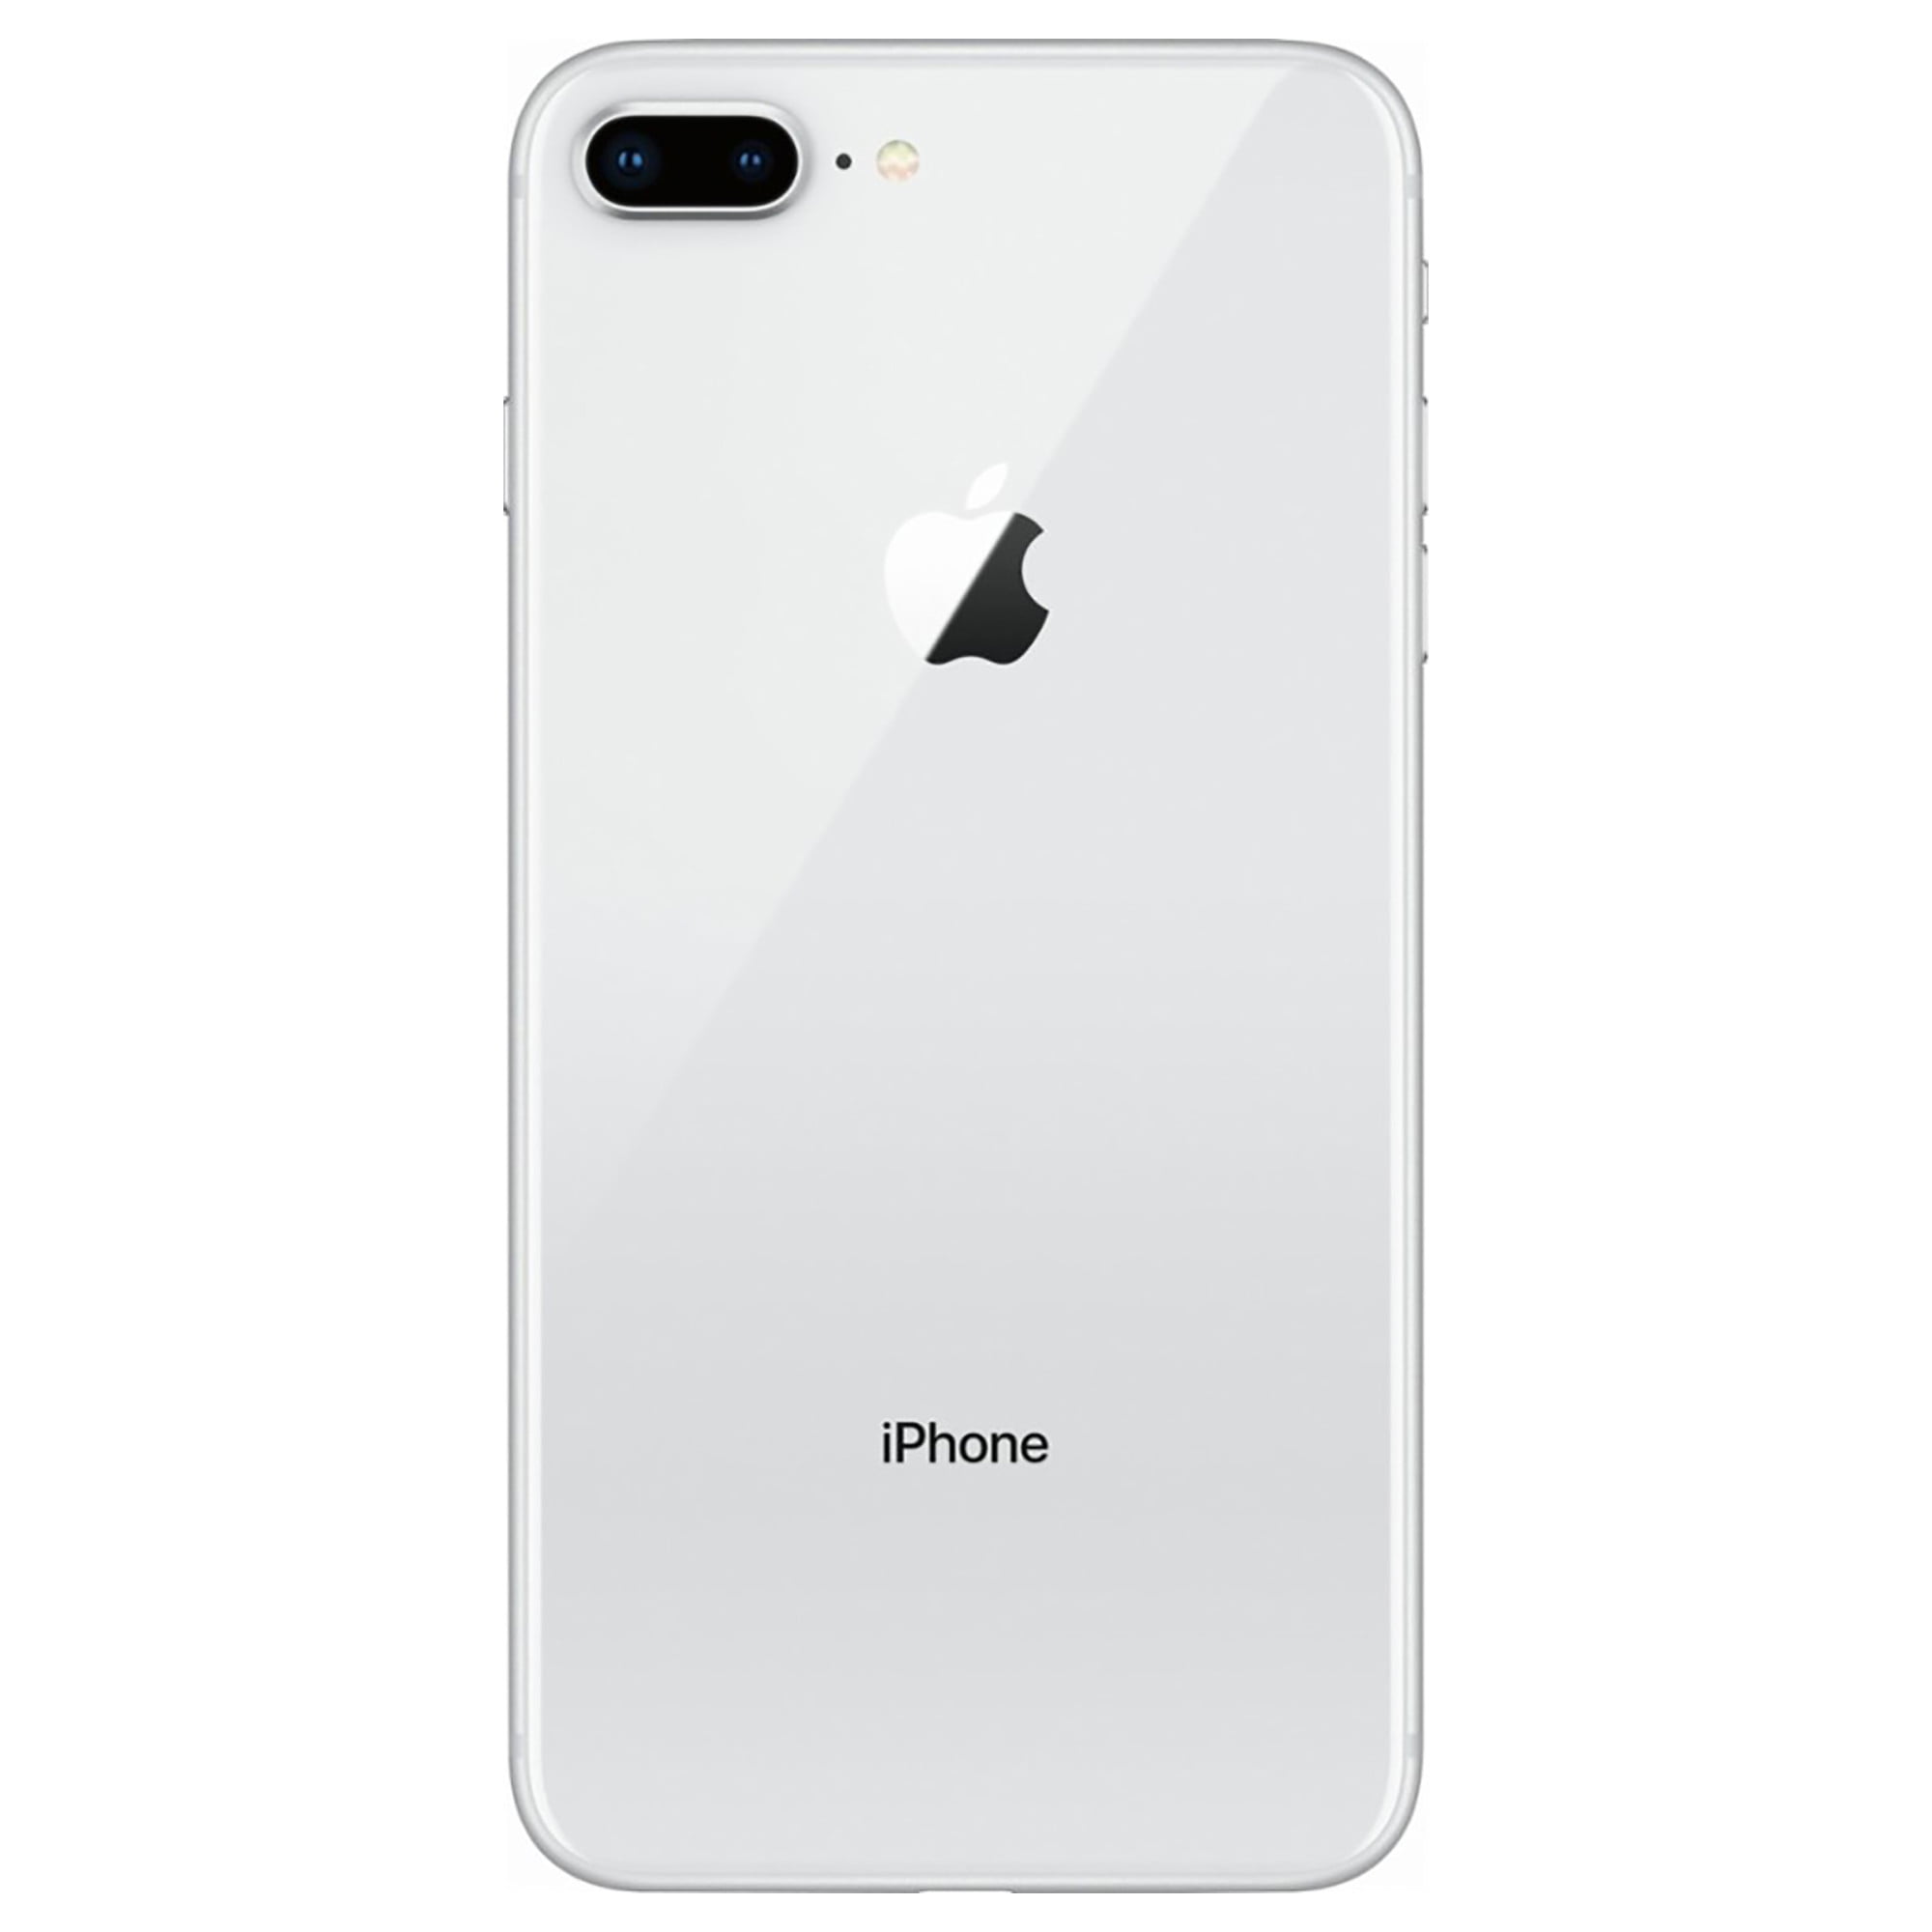 Apple iPhone 8 64GB Silver (T-Mobile Locked) Smartphone - Grade 